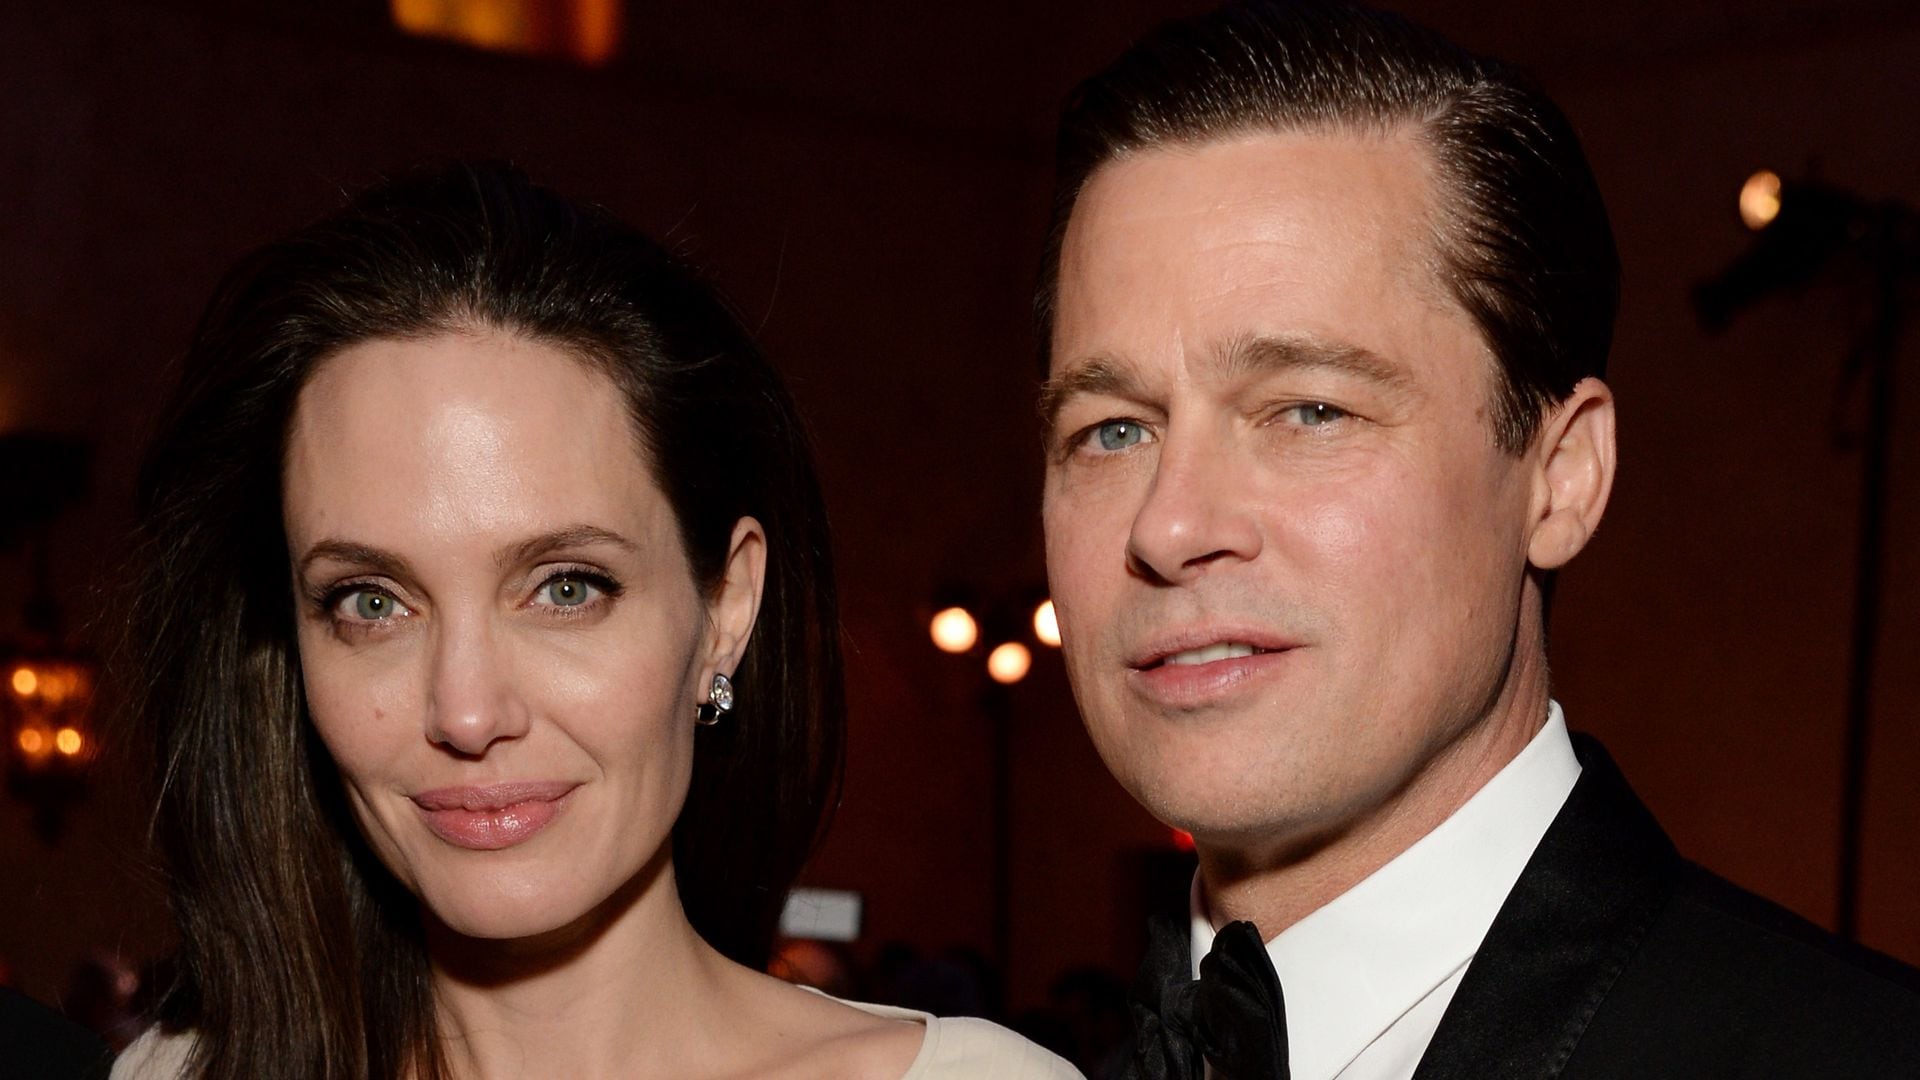 Brad Pitt calls Angelina Jolie's new legal request 'intrusive'